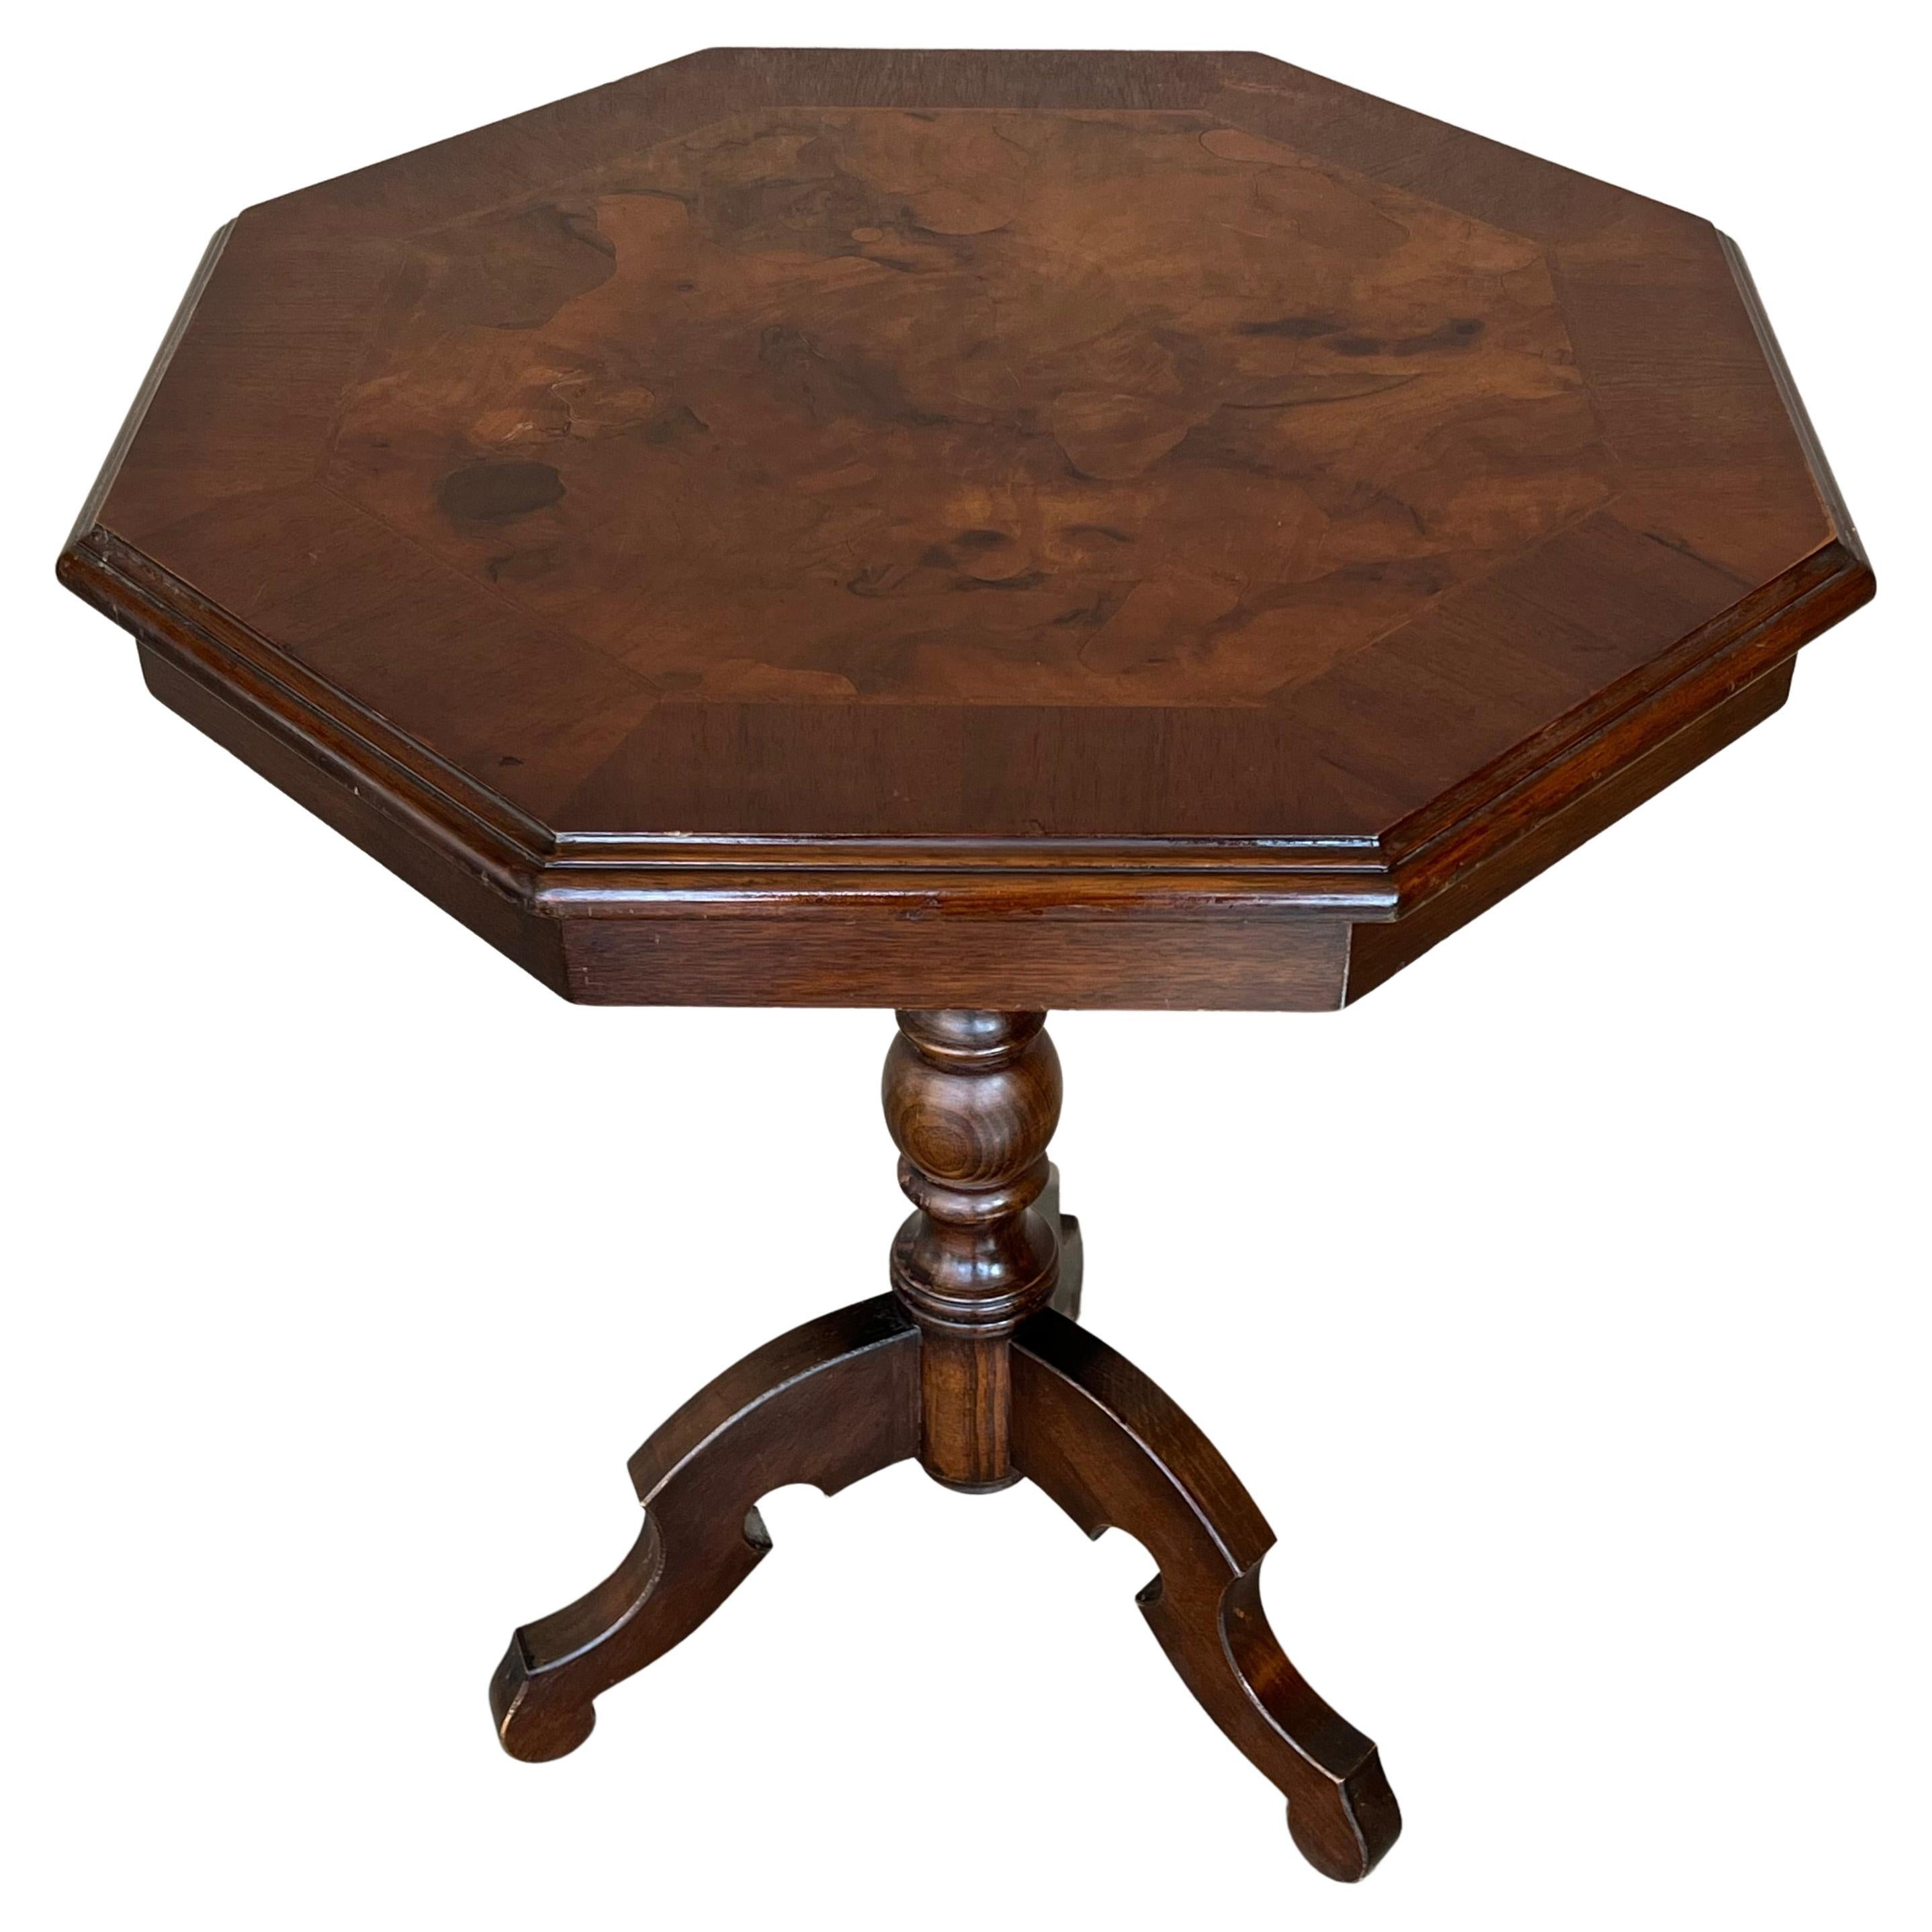 English Octogonal Pedestal Tea or Side Table, 19th Century